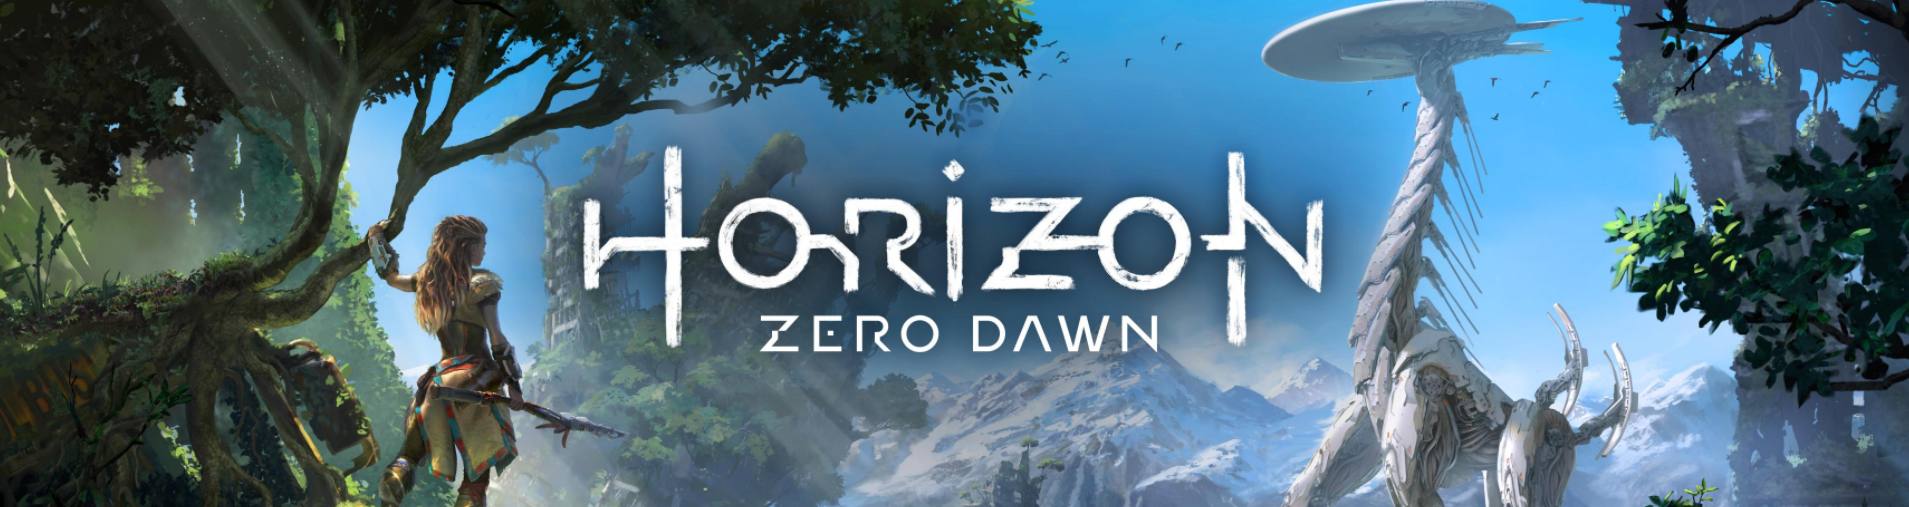 horizon zero dawn banner 1